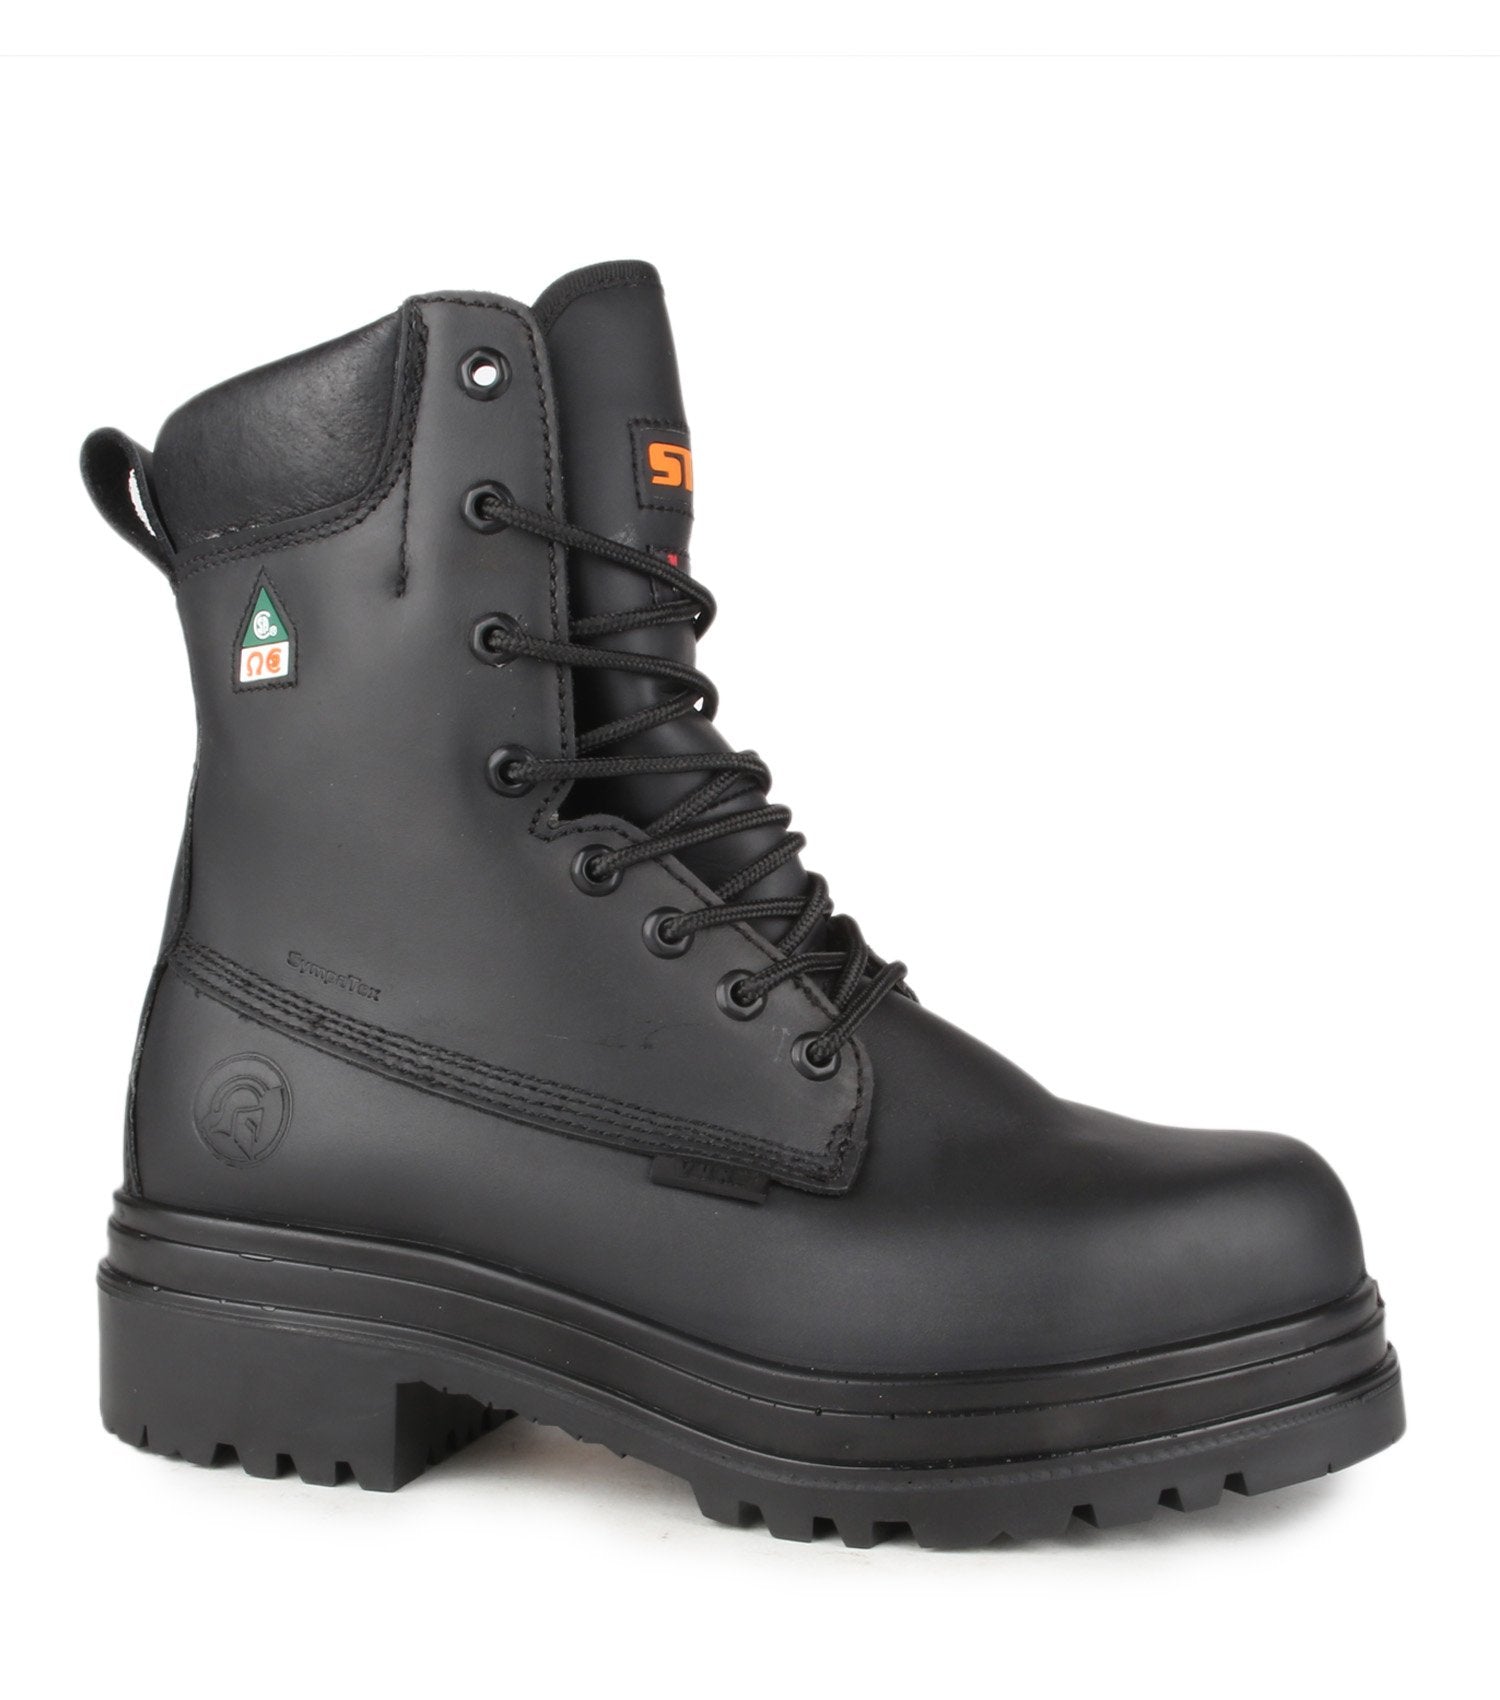 STC Alertz 8" Safety Boots w/ Zip Kit | Black | Sizes 6 - 14 Work Boots - Cleanflow